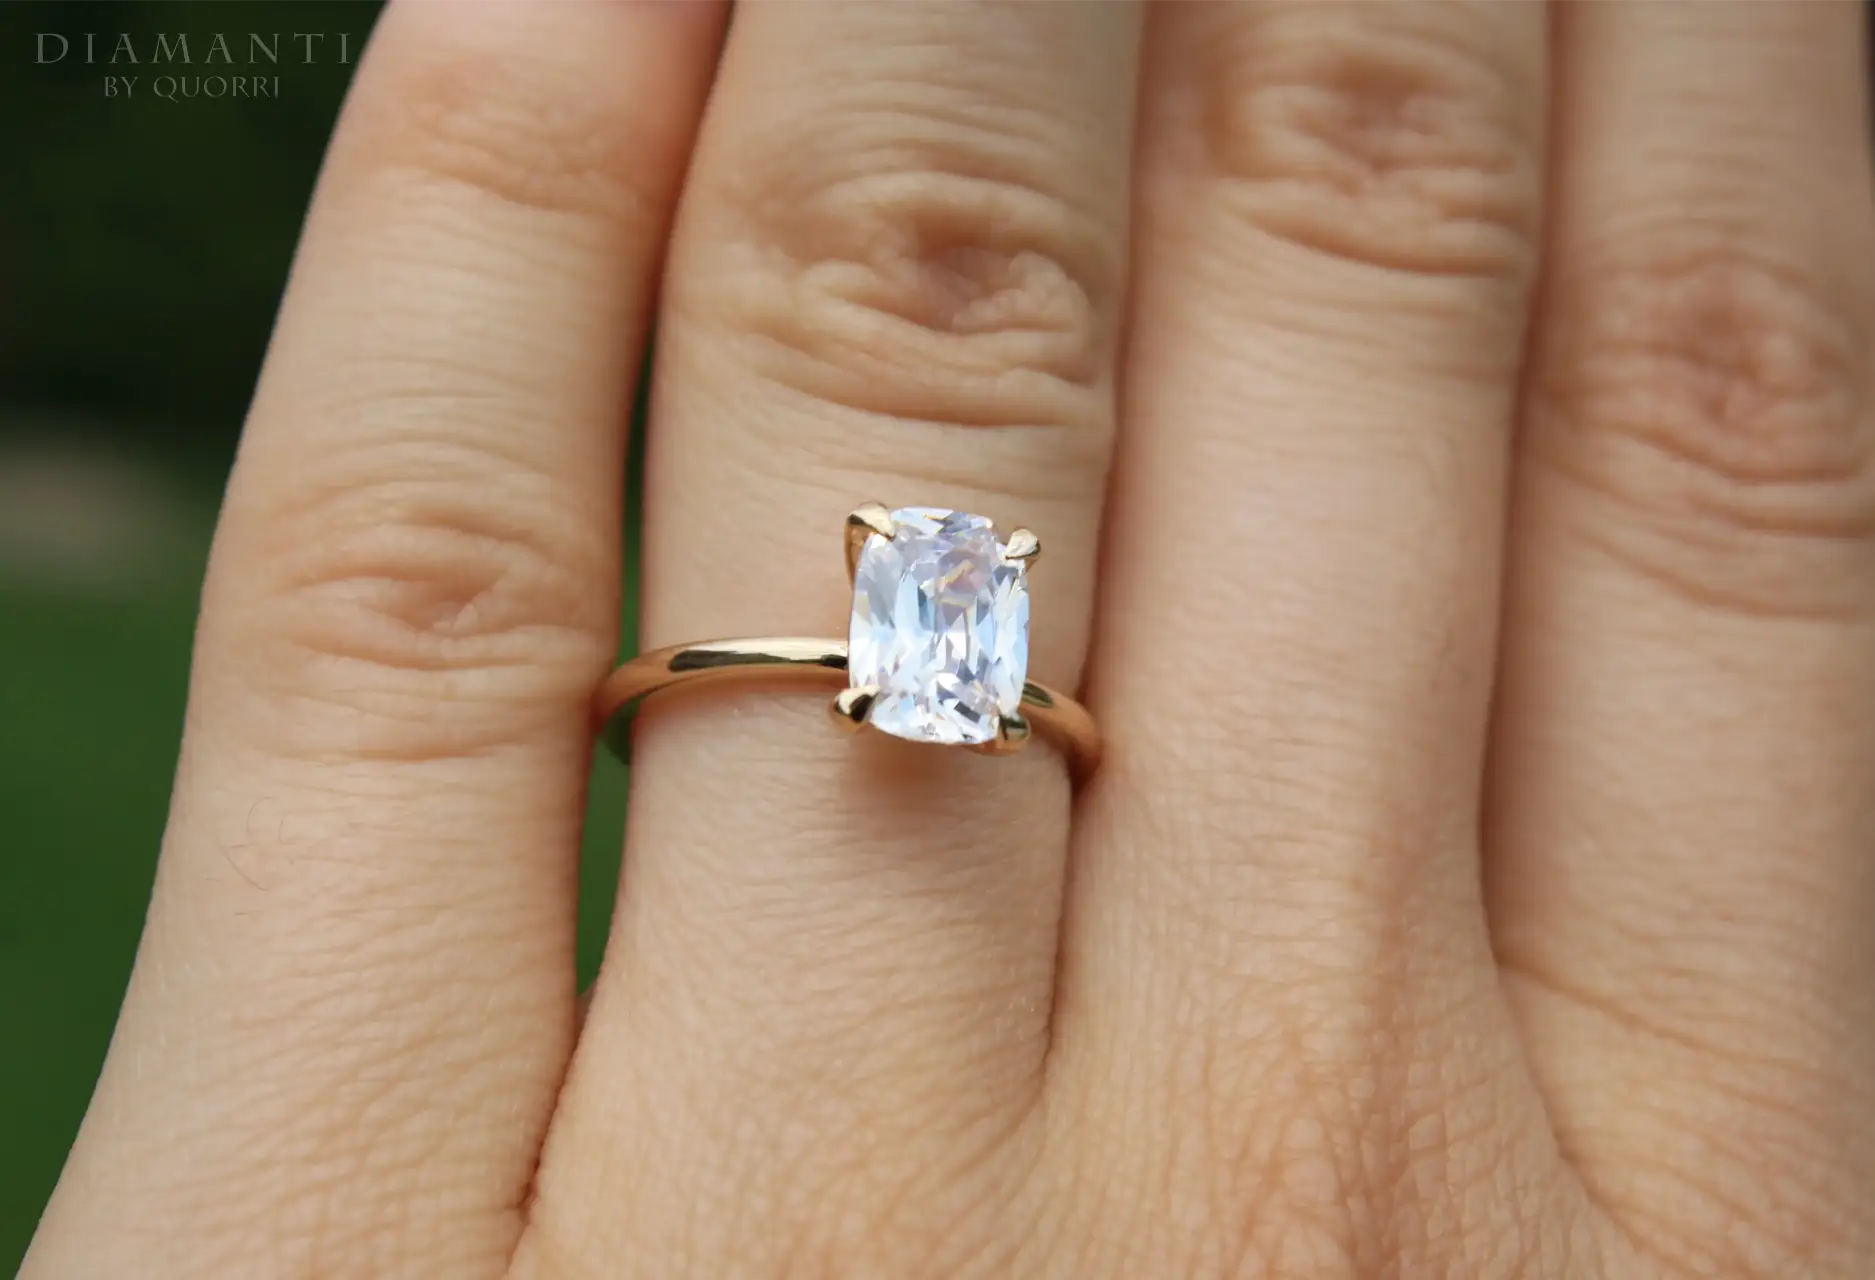 claw prong rose gold 2 carat elongated cushion lab diamond engagement ring Quorri